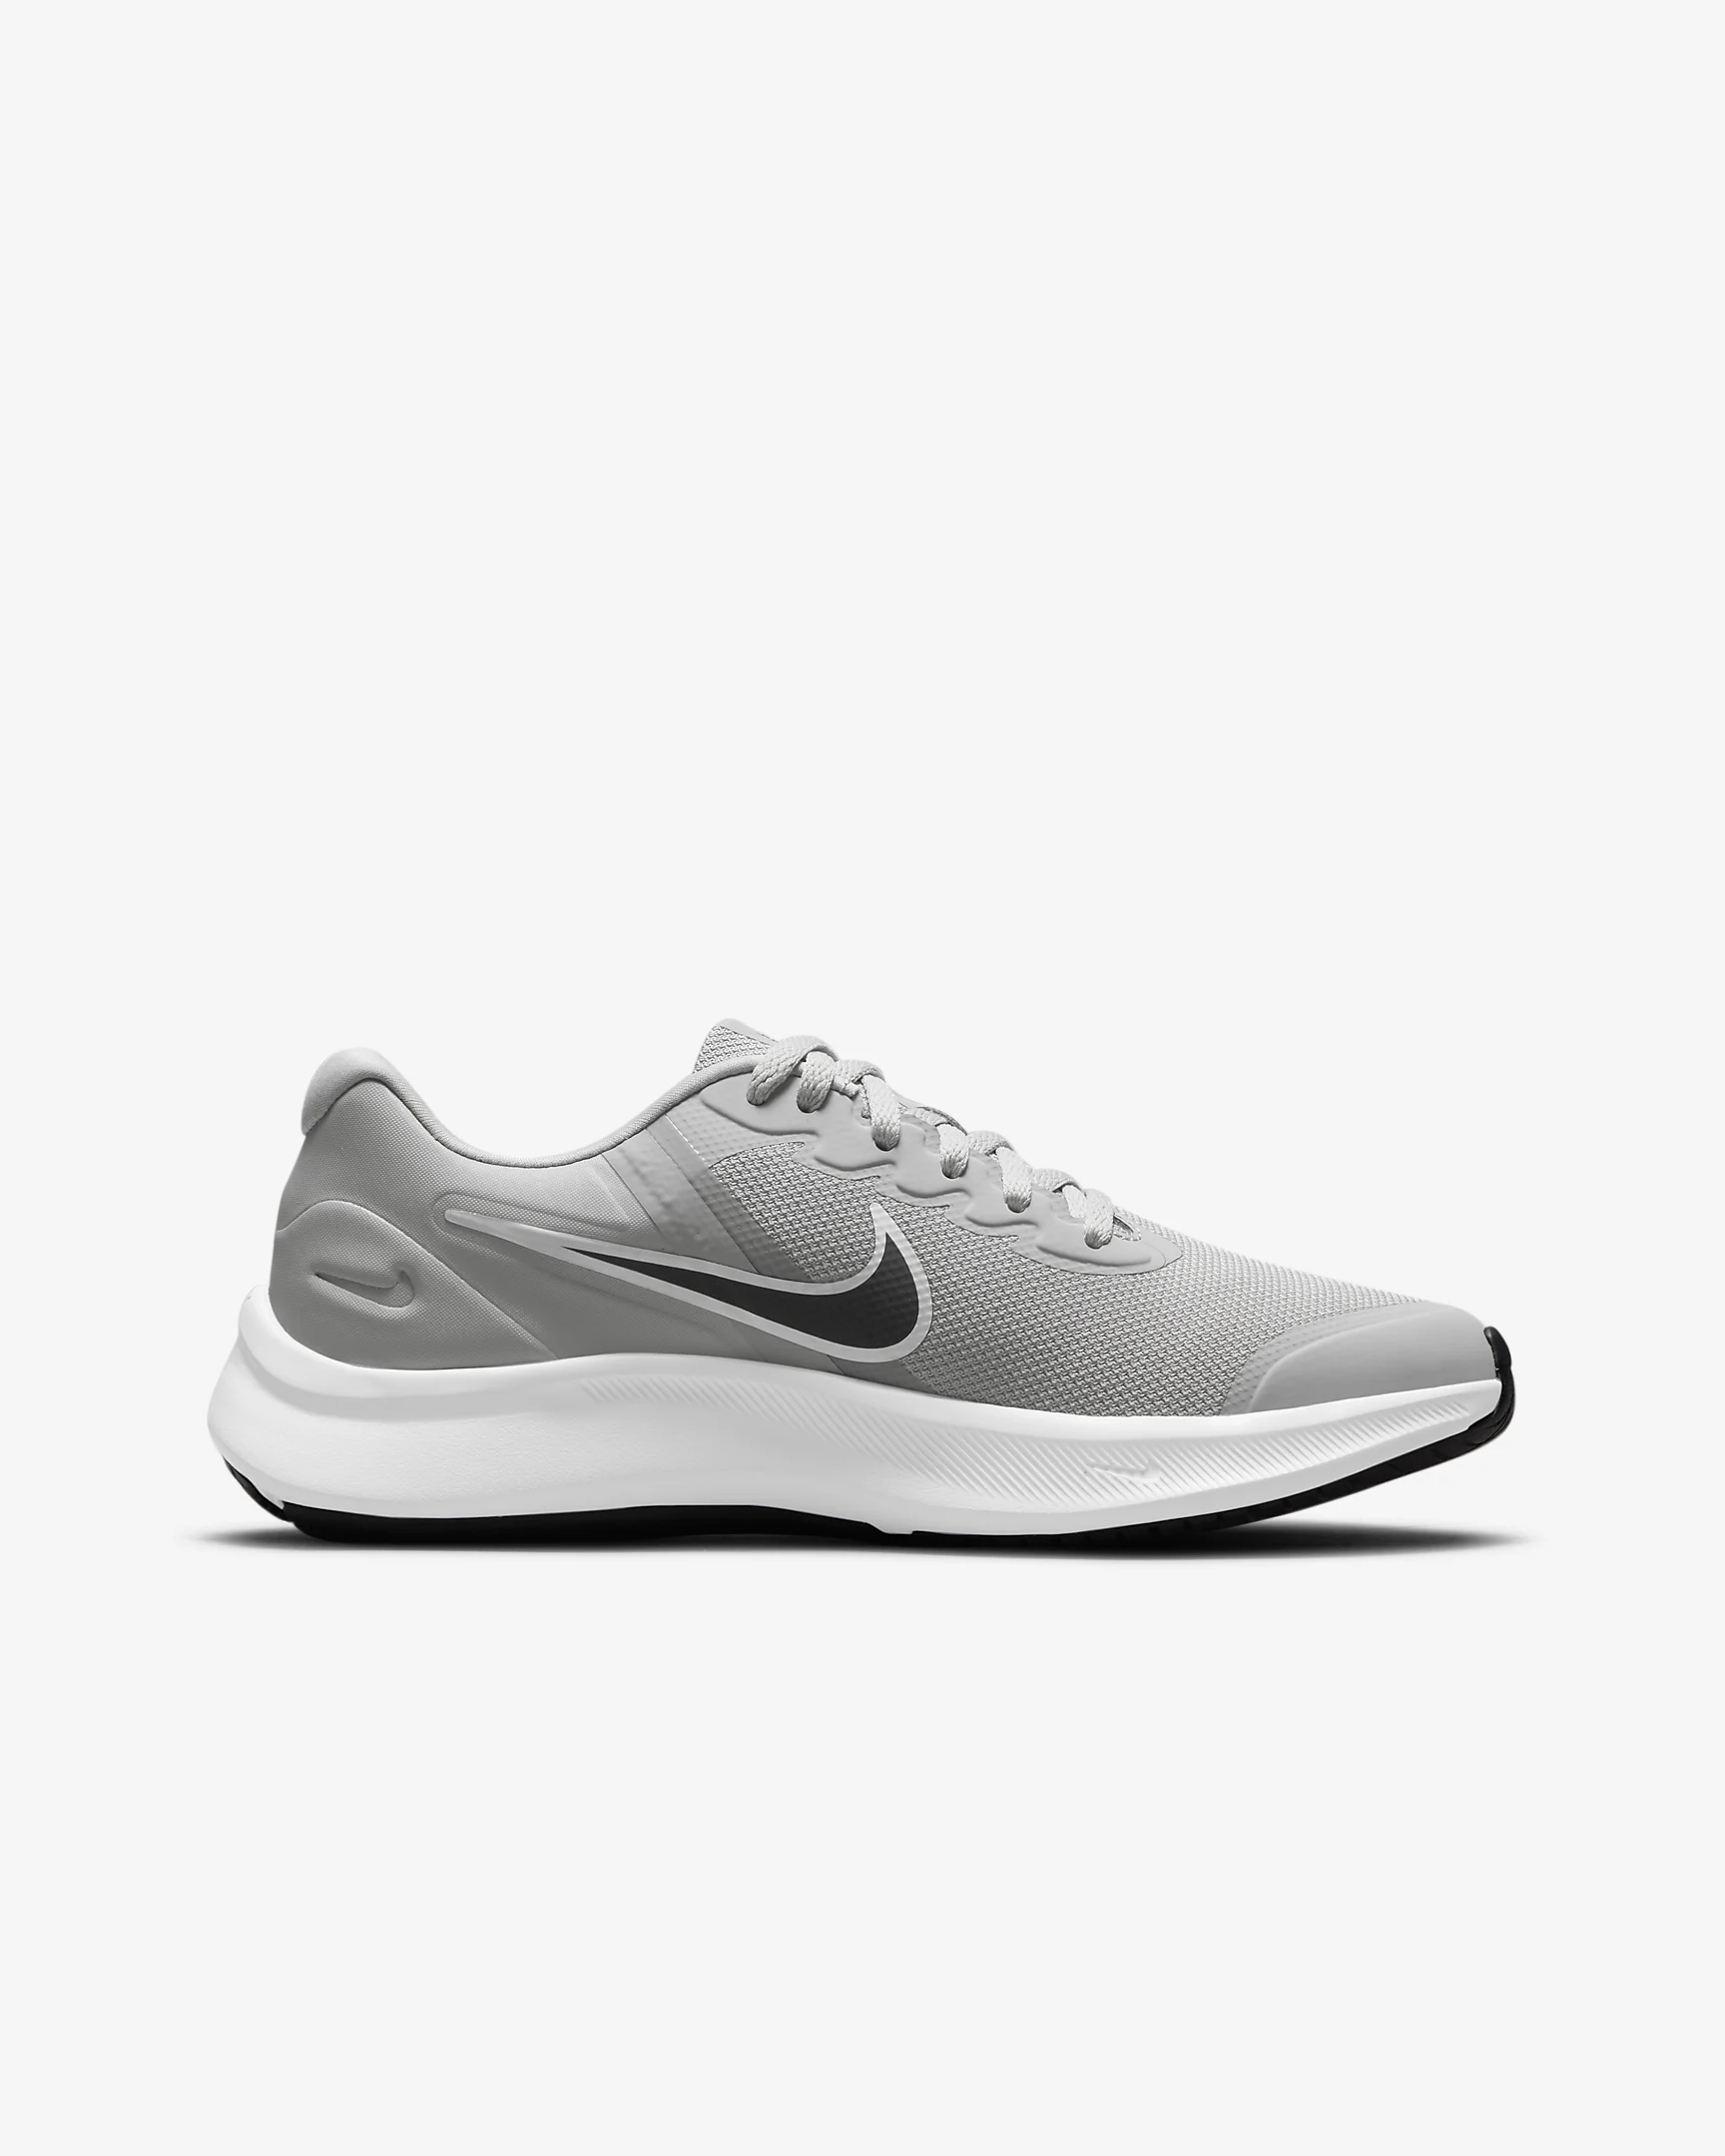 DA2776-005 US Size Grade School Grey/Black-Smoke Runner Star Shoe Smoke 7 Lt. 3 Nike Grey